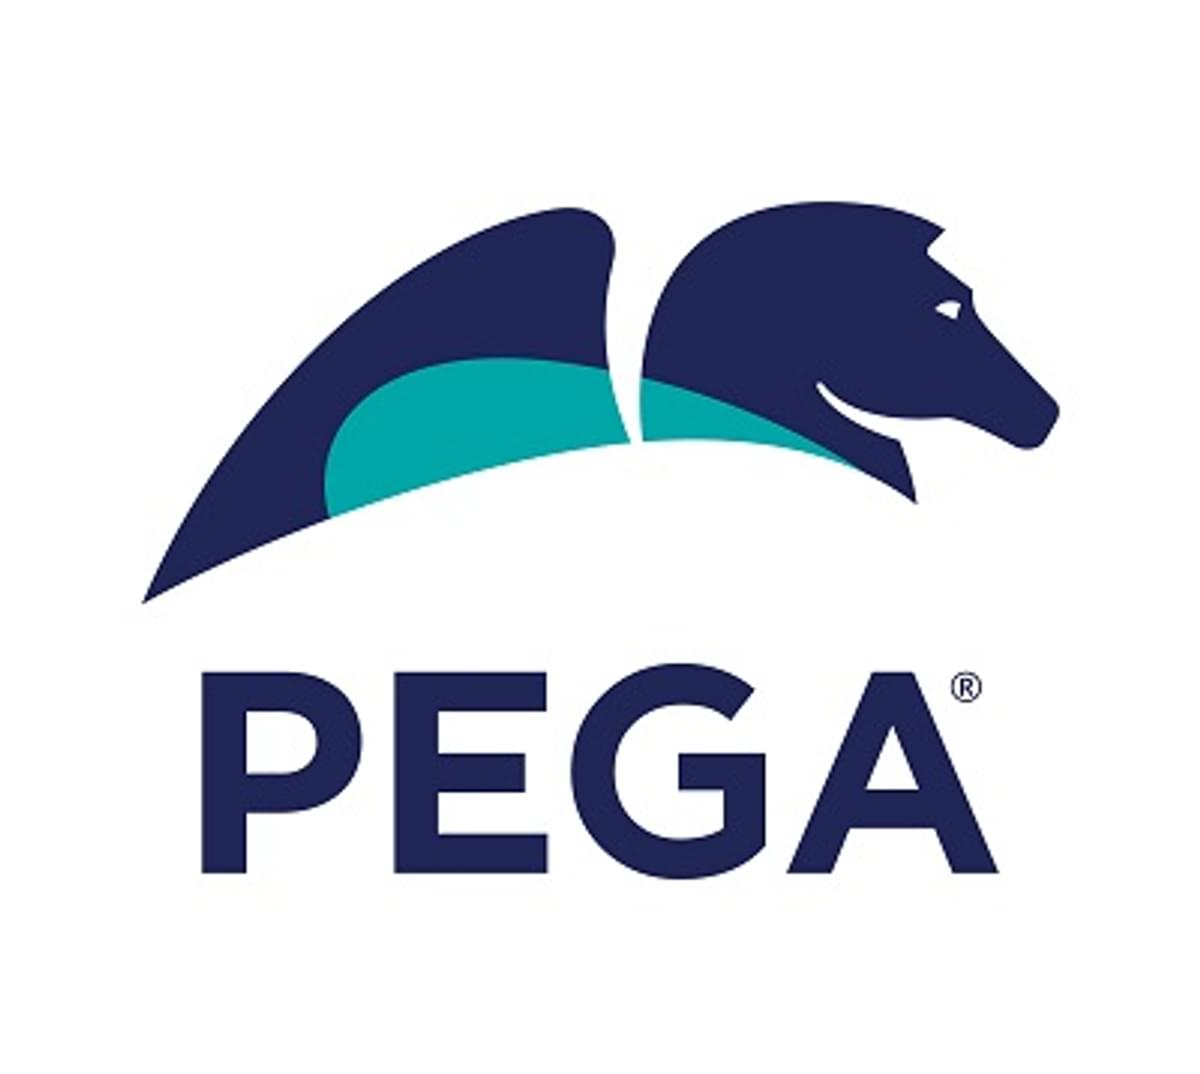 Next-Best-Action Designer van Pega versnelt AI-implementaties image